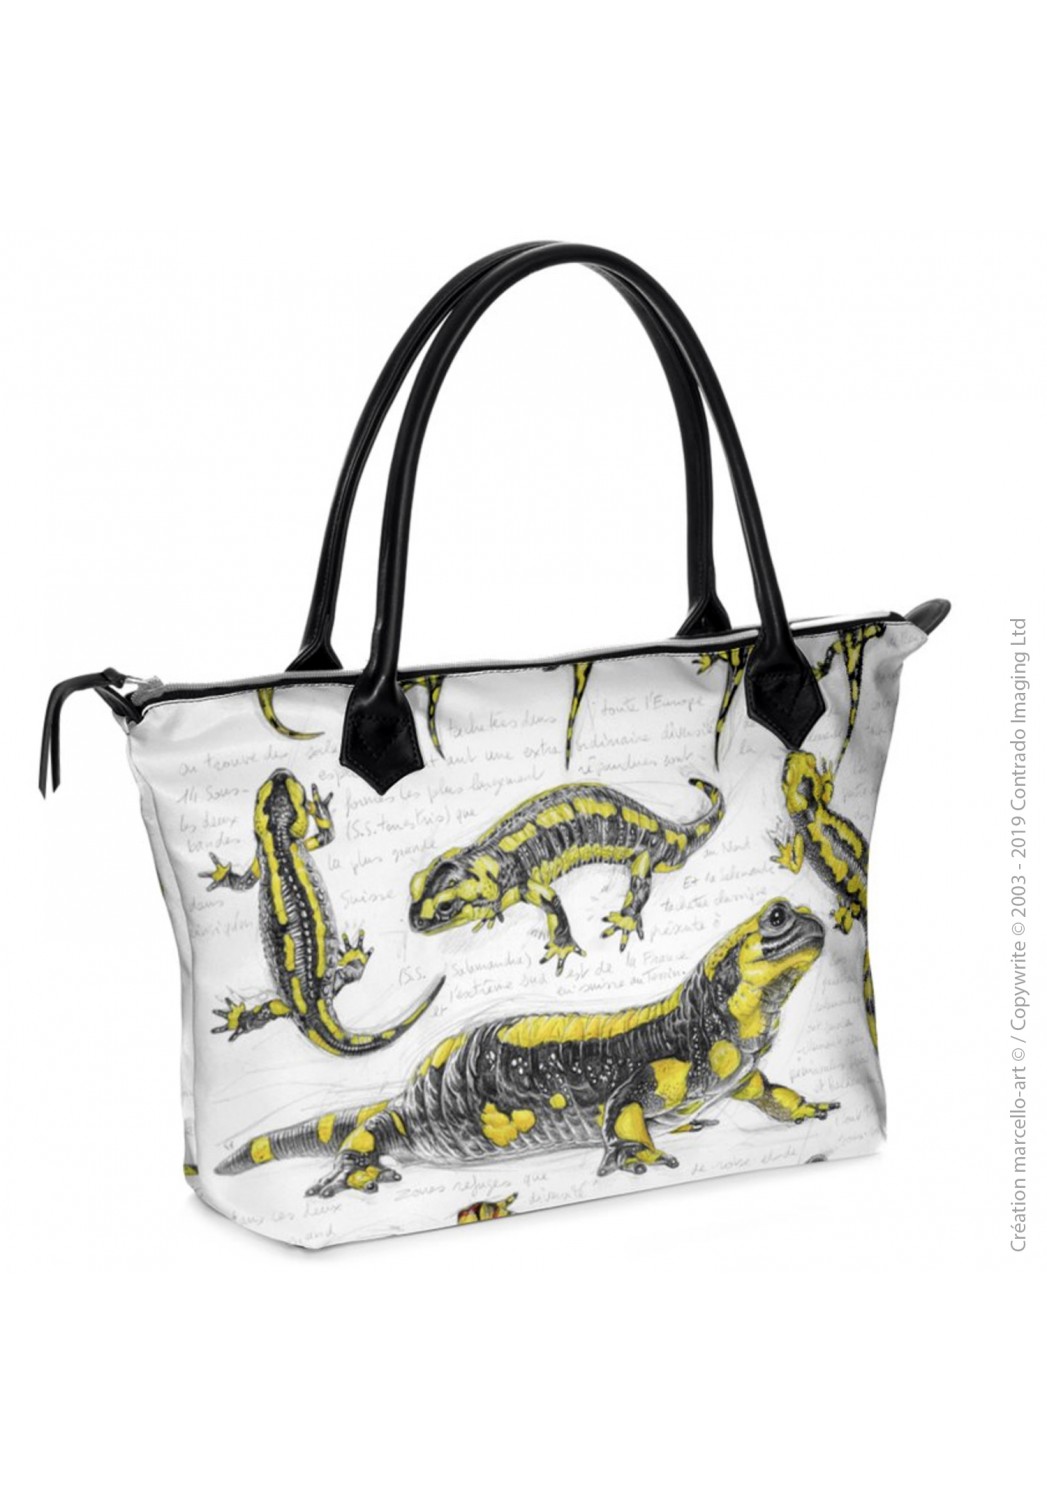 Marcello-art: Fashion accessory Zipped bag 383 salamander